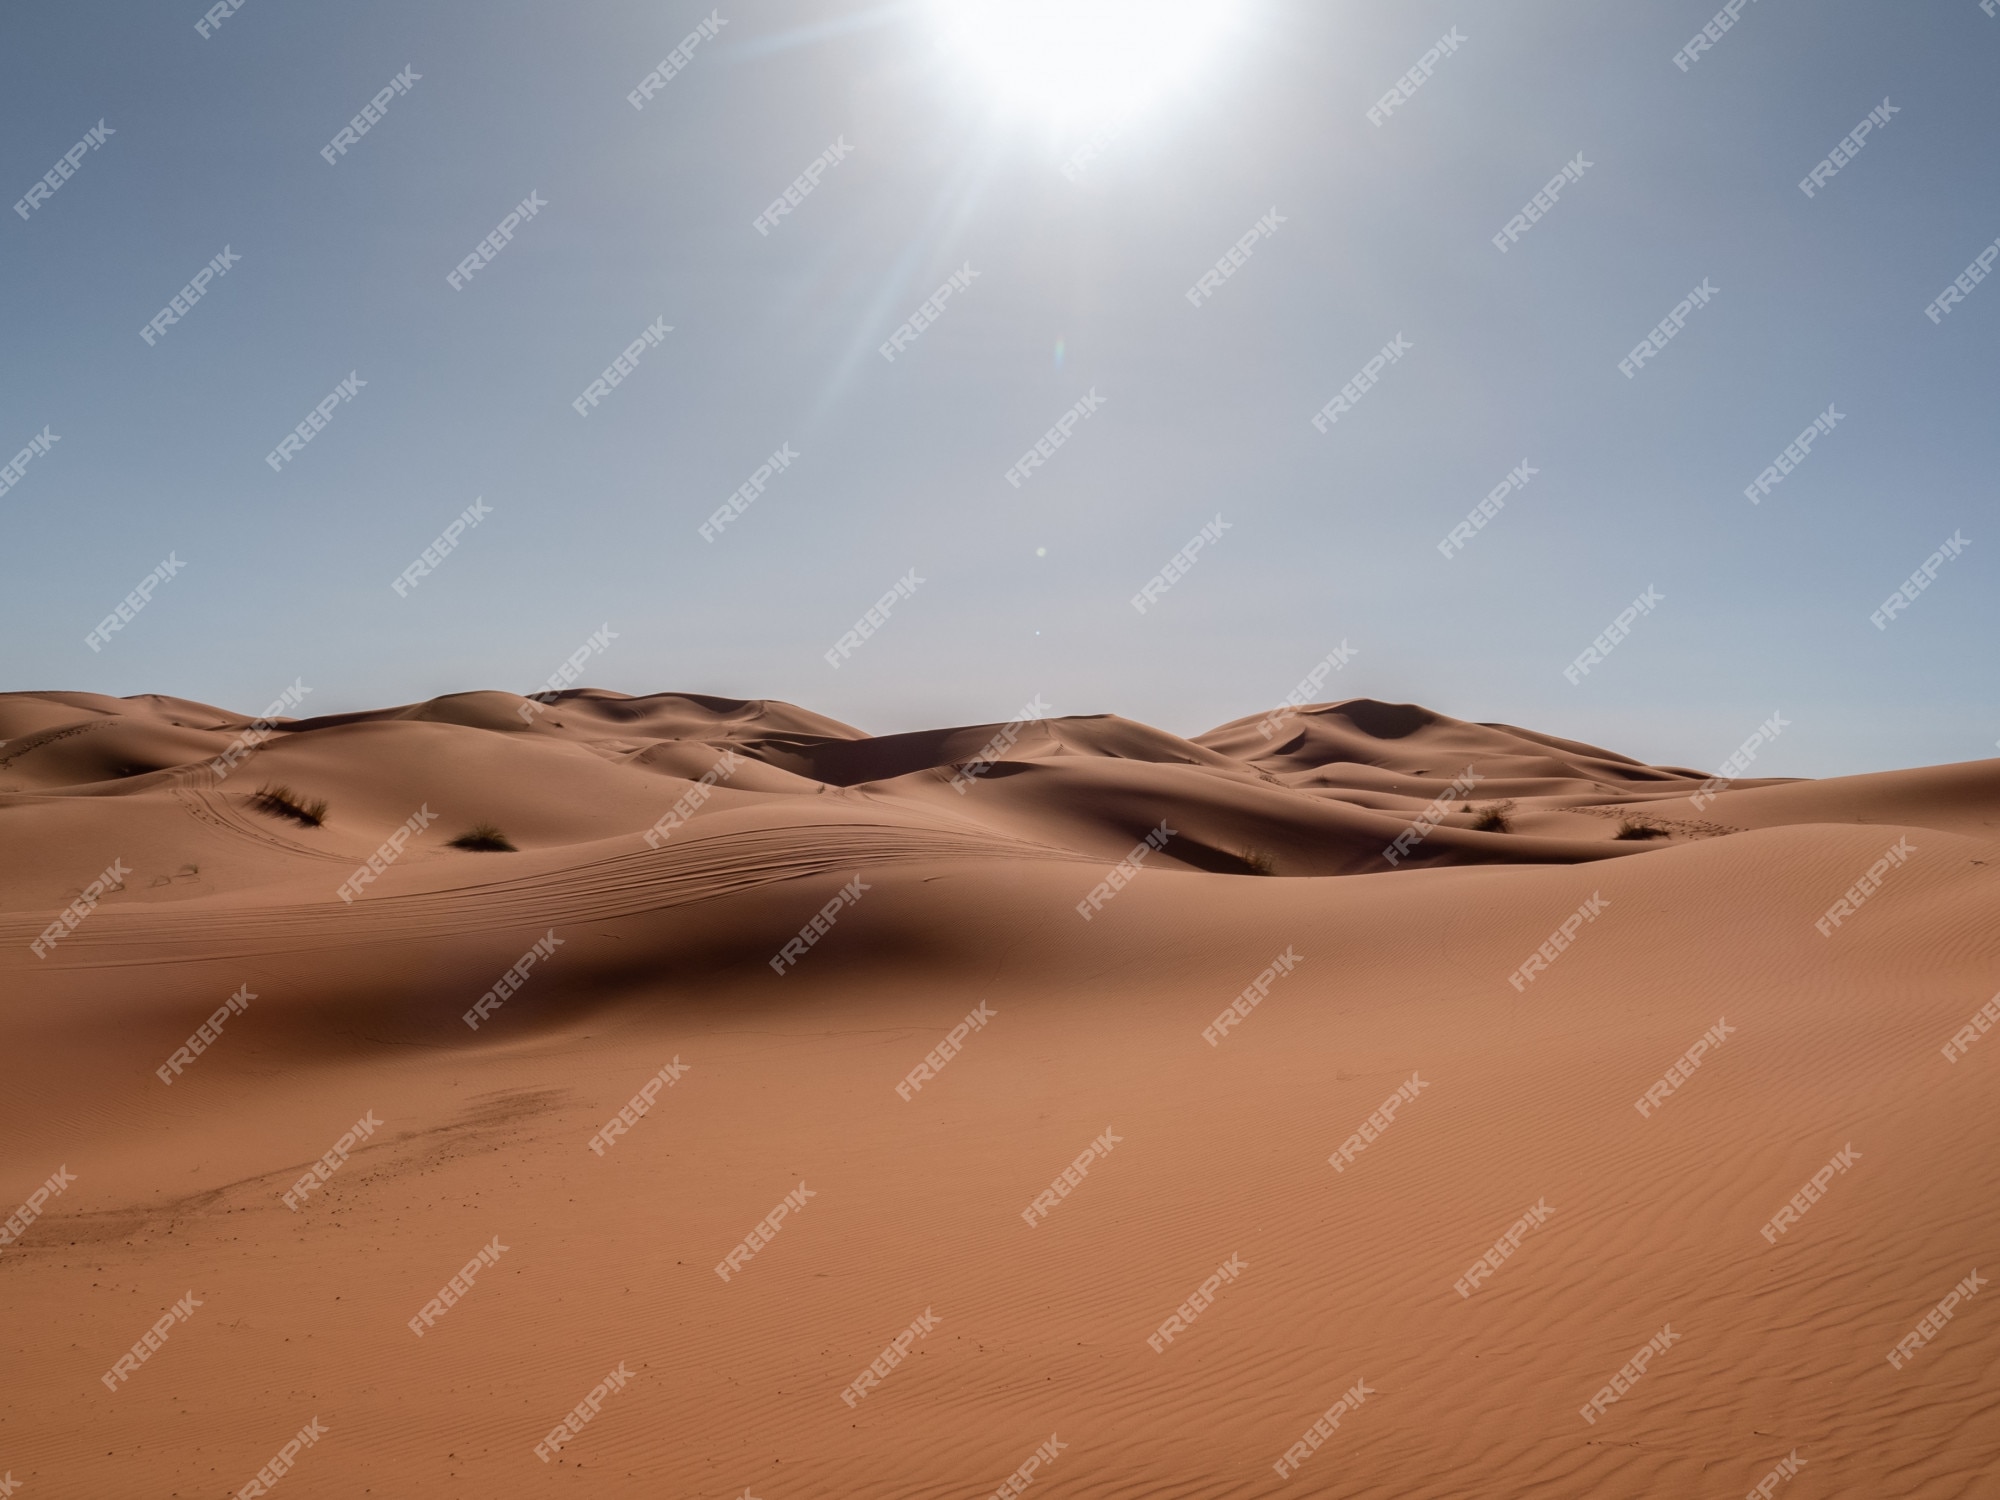 Premium Photo | Dune in the sahara desert